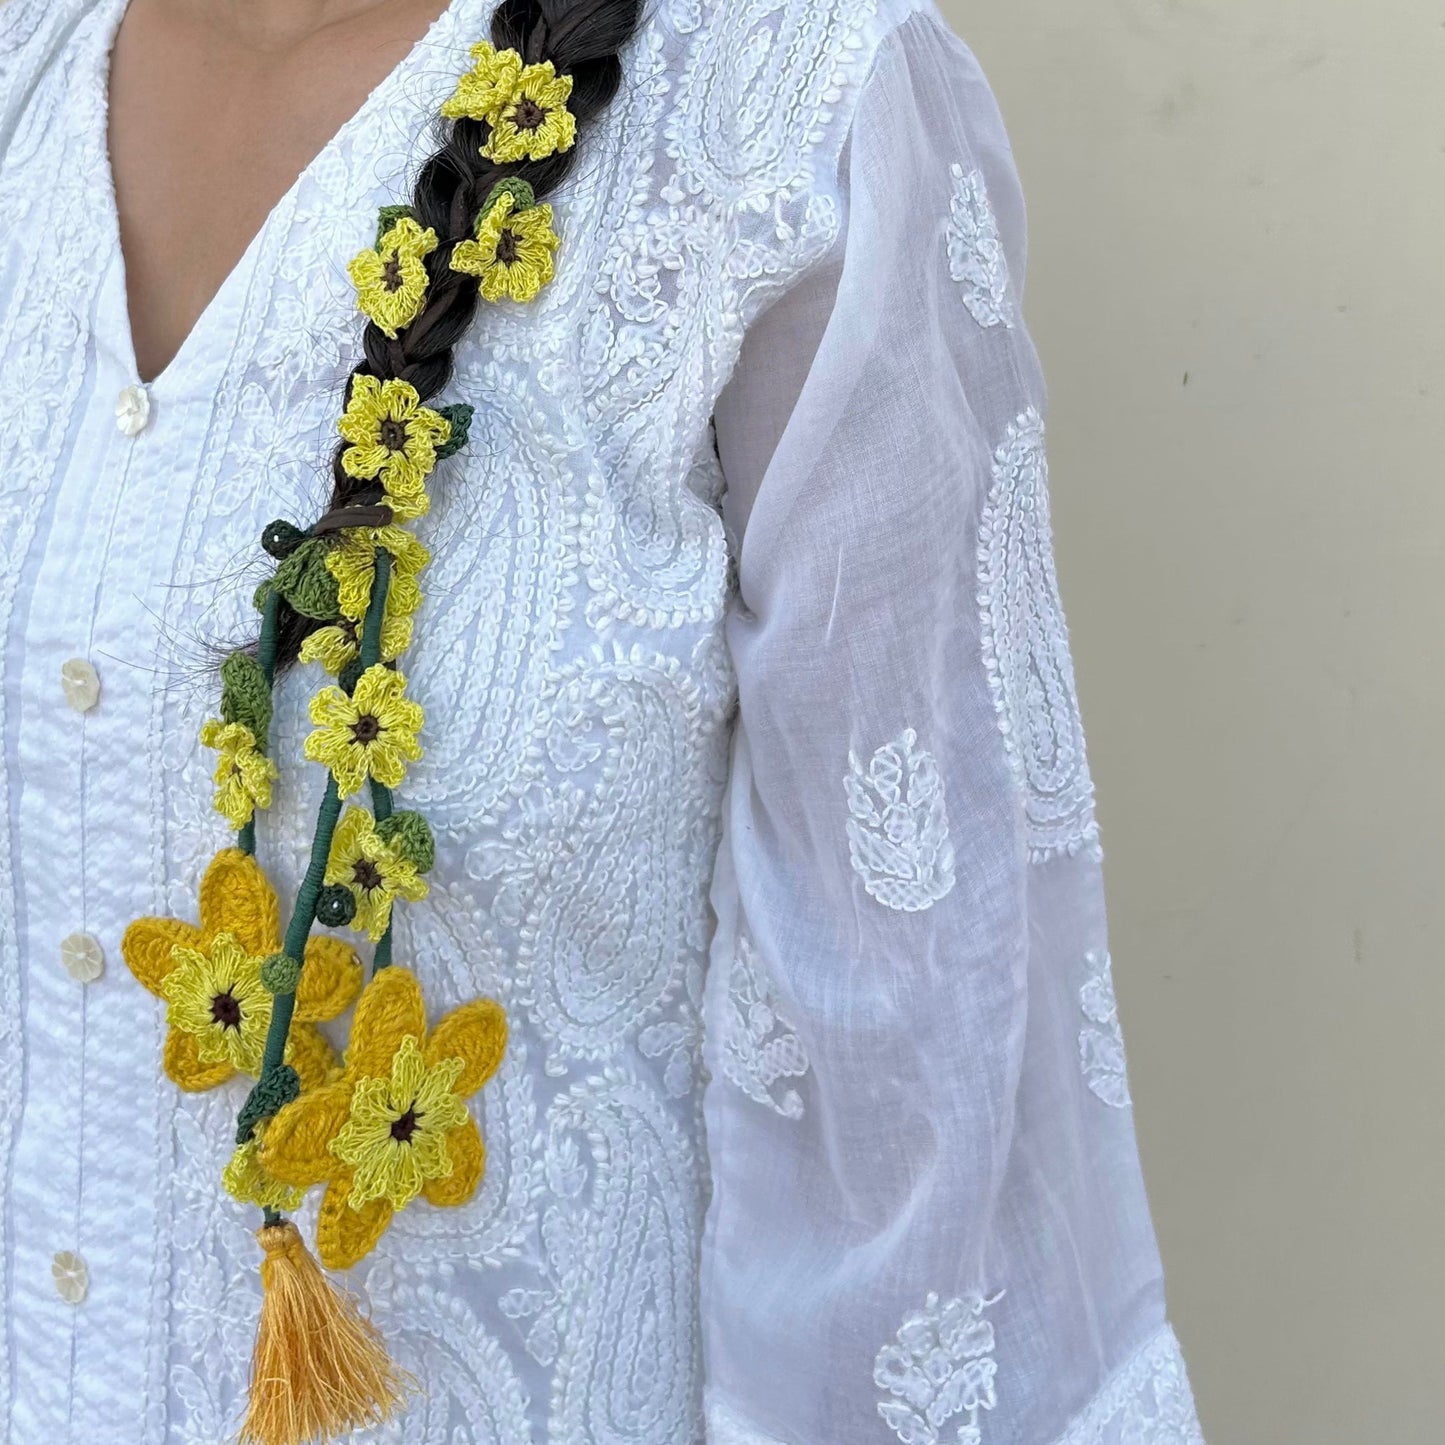 Yellow Crochet Hair Parandi at Kamakhyaa by Ikriit'm. This item is Accessories, Cotton yarn, Crochet, Free Size, Hair Accessories, Ikriit'm, Natural, Yellow